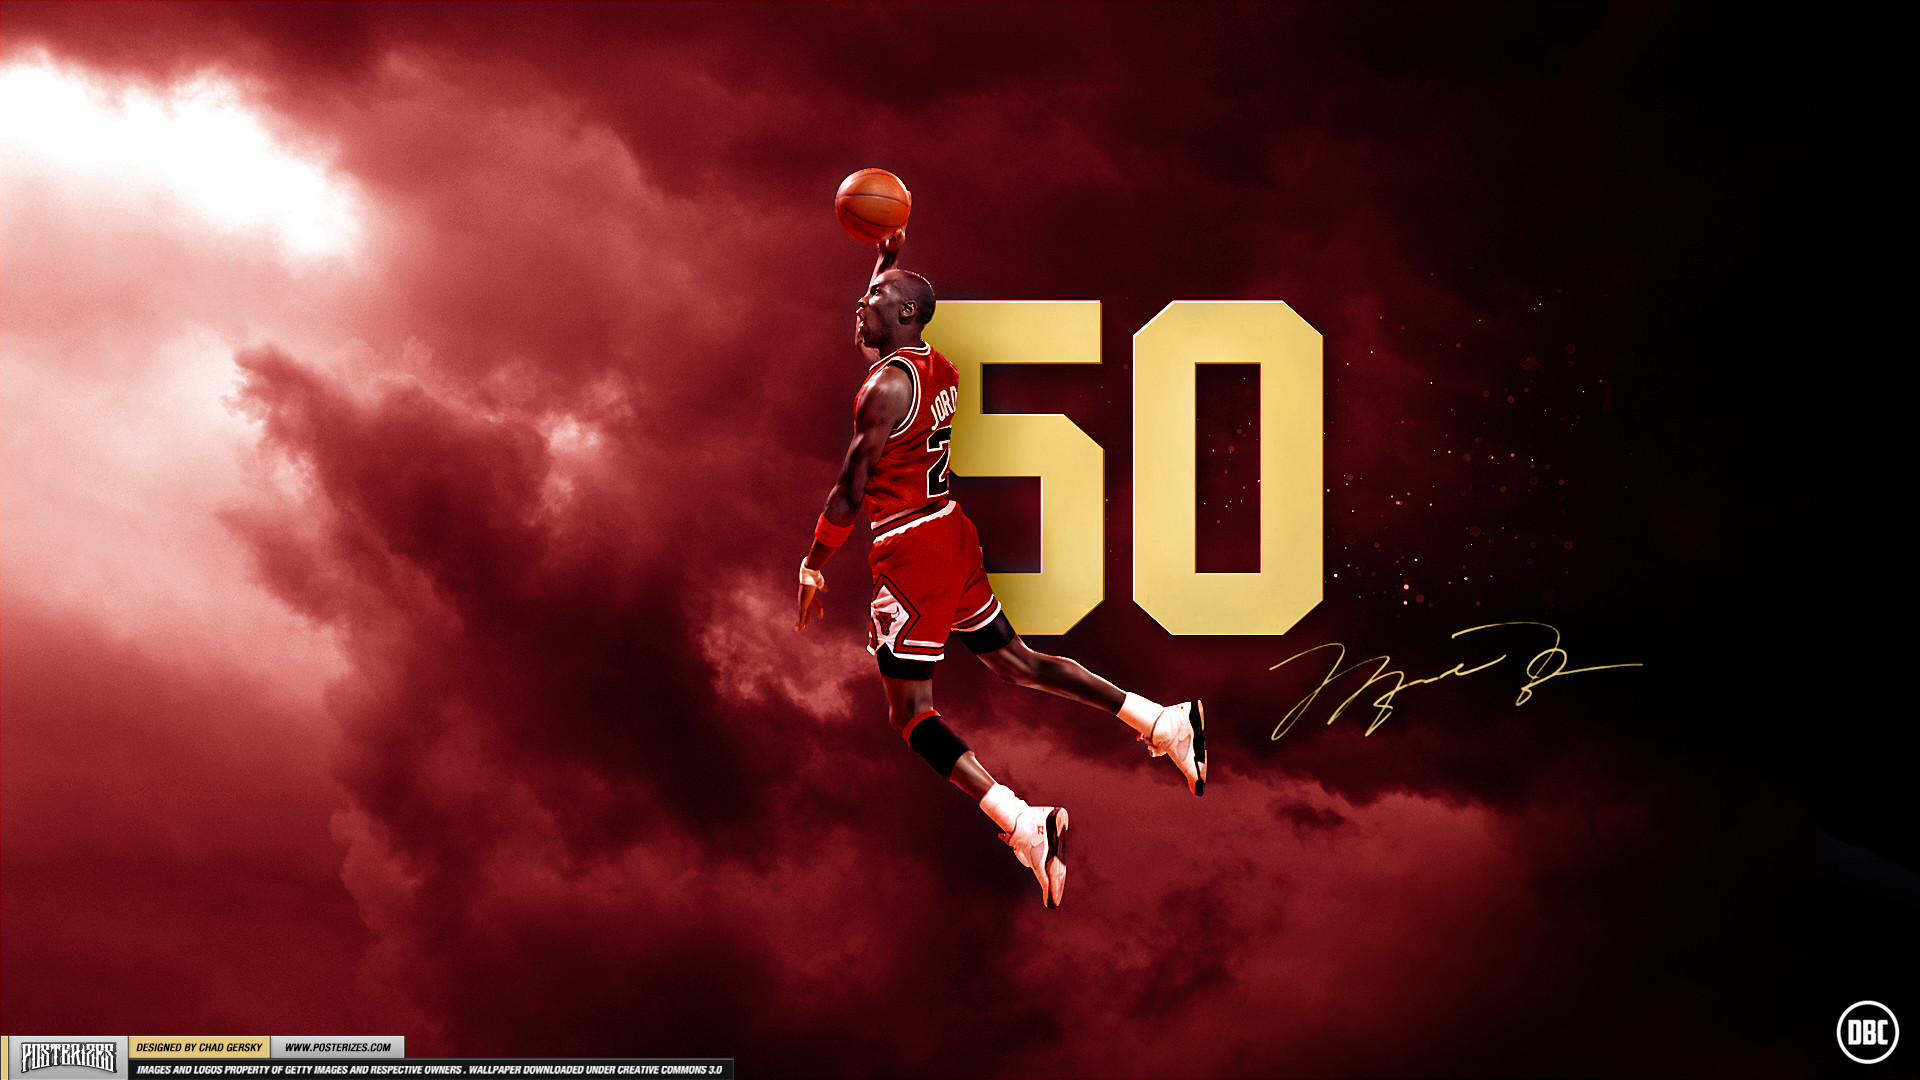 Michael Jordan Wallpaper Widescreen